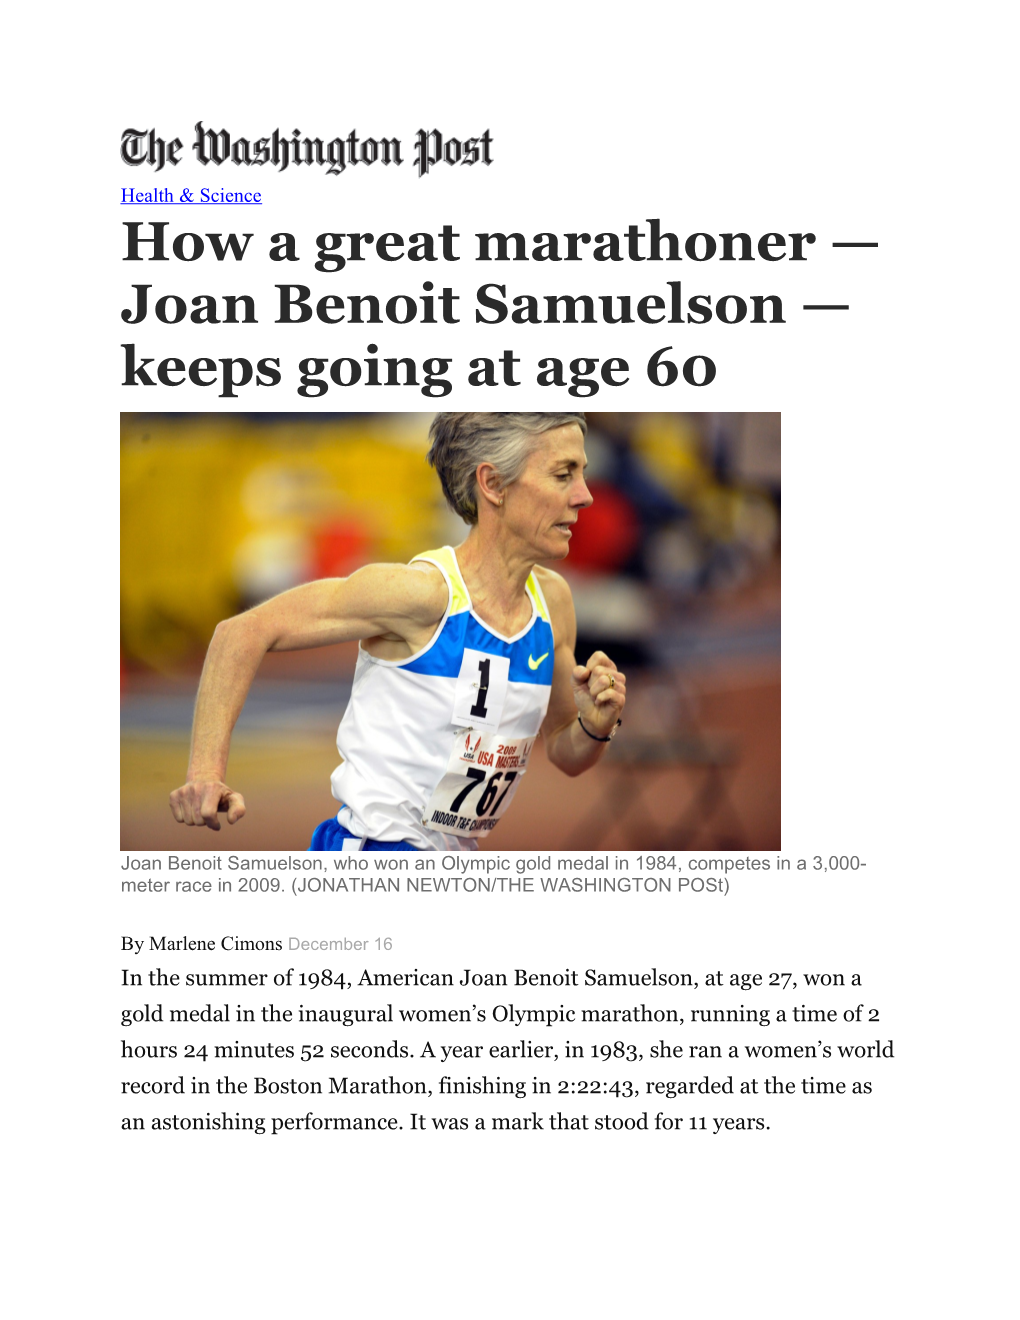 How a Great Marathoner Joan Benoit Samuelson Keeps Going at Age 60